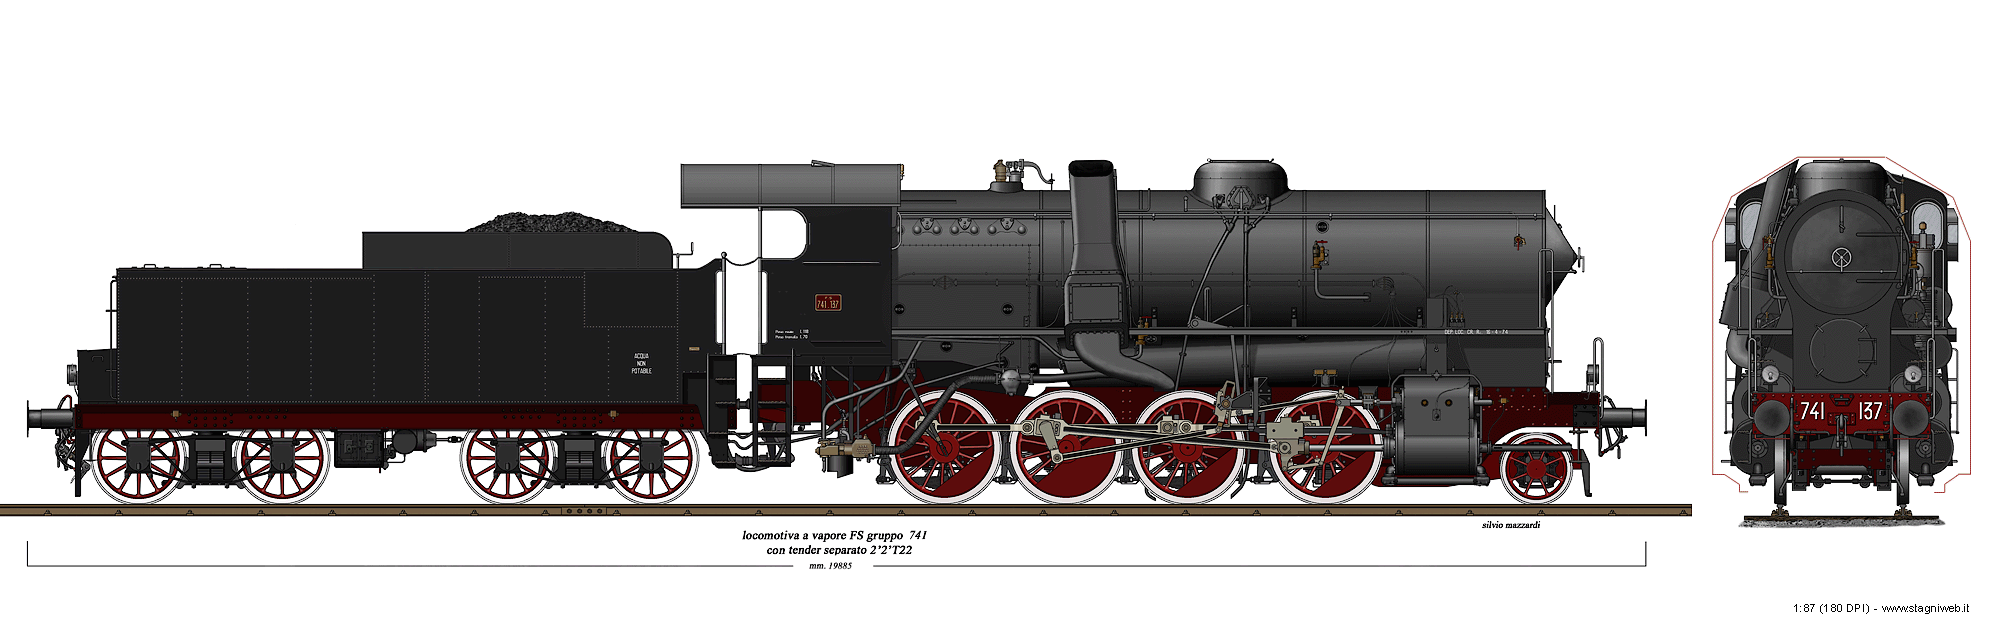 Locomotive a vapore - Gr. 741 Franco-Crosti